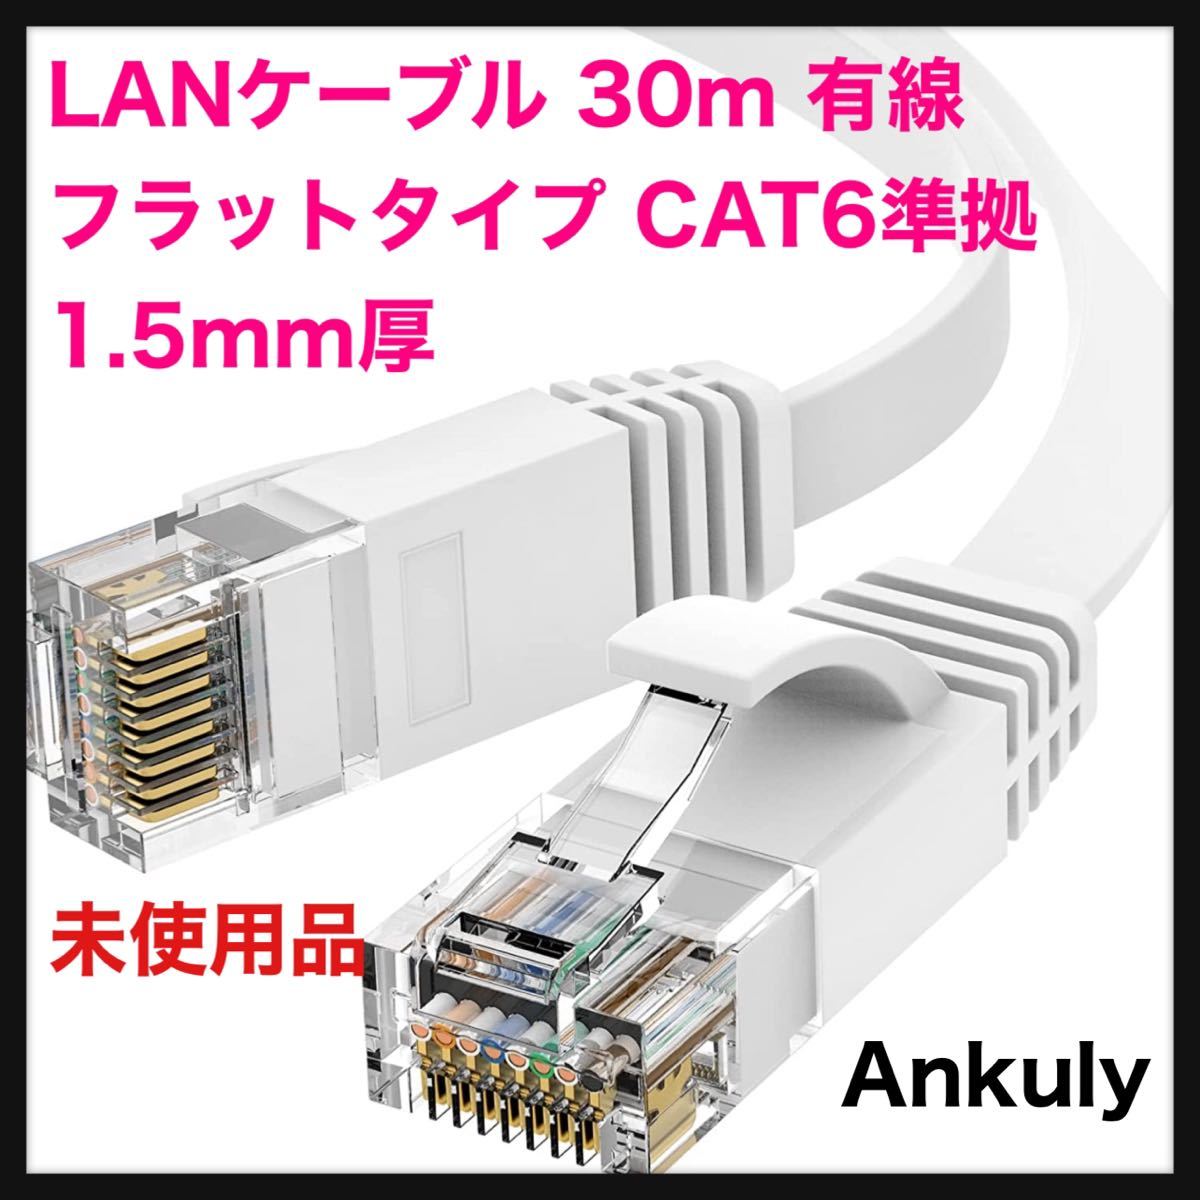 CAT6 LANケーブル 30m LEKVKM CAT 6 lan ケーブル 即納最大半額 - PC